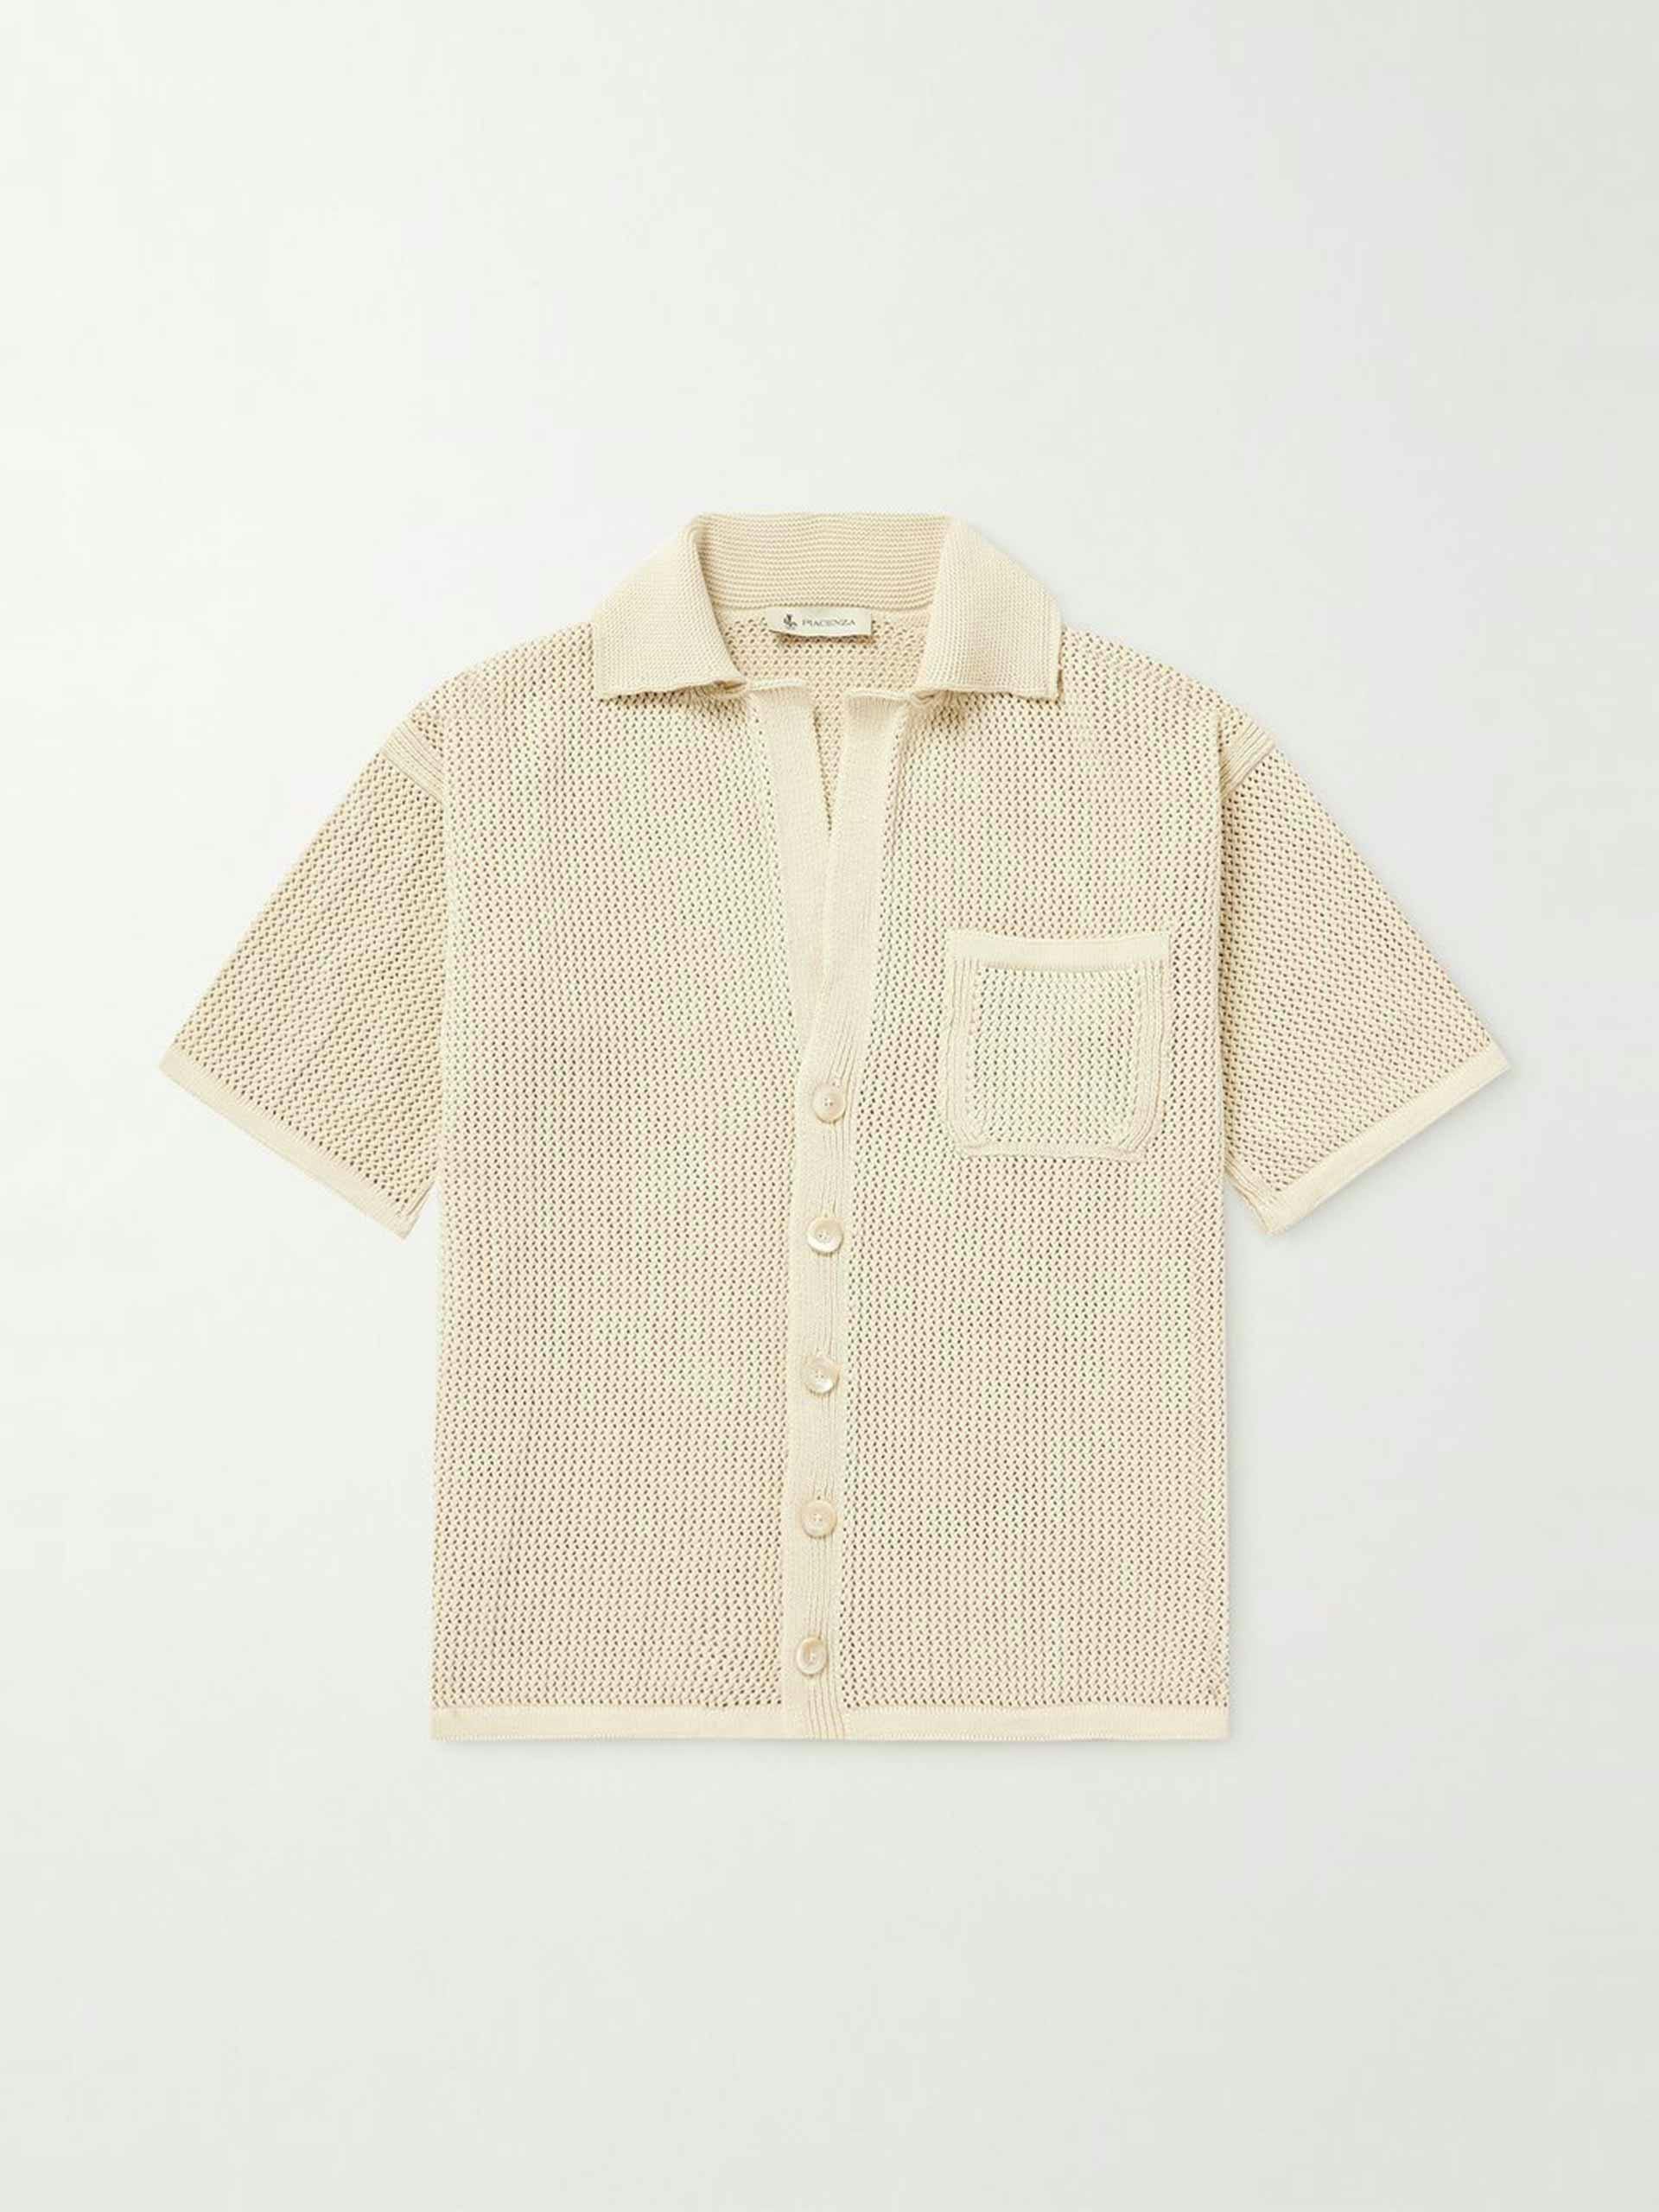 Off-white open-knit cotton shirt